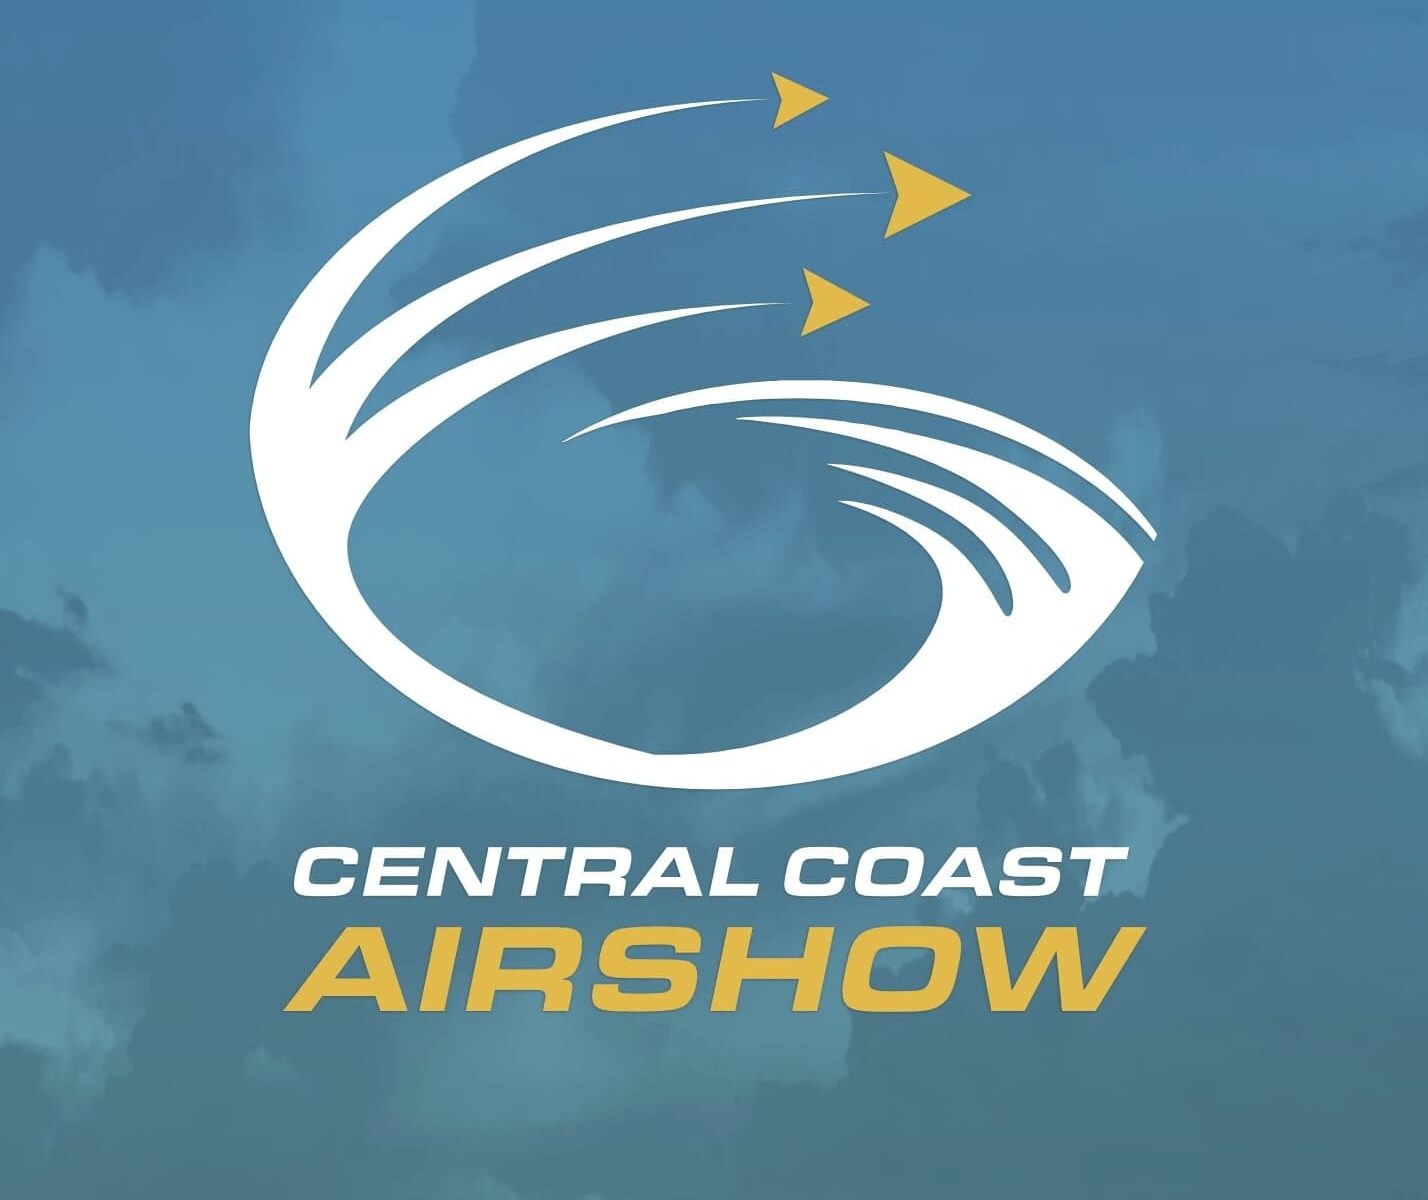 Central Coast Airshow